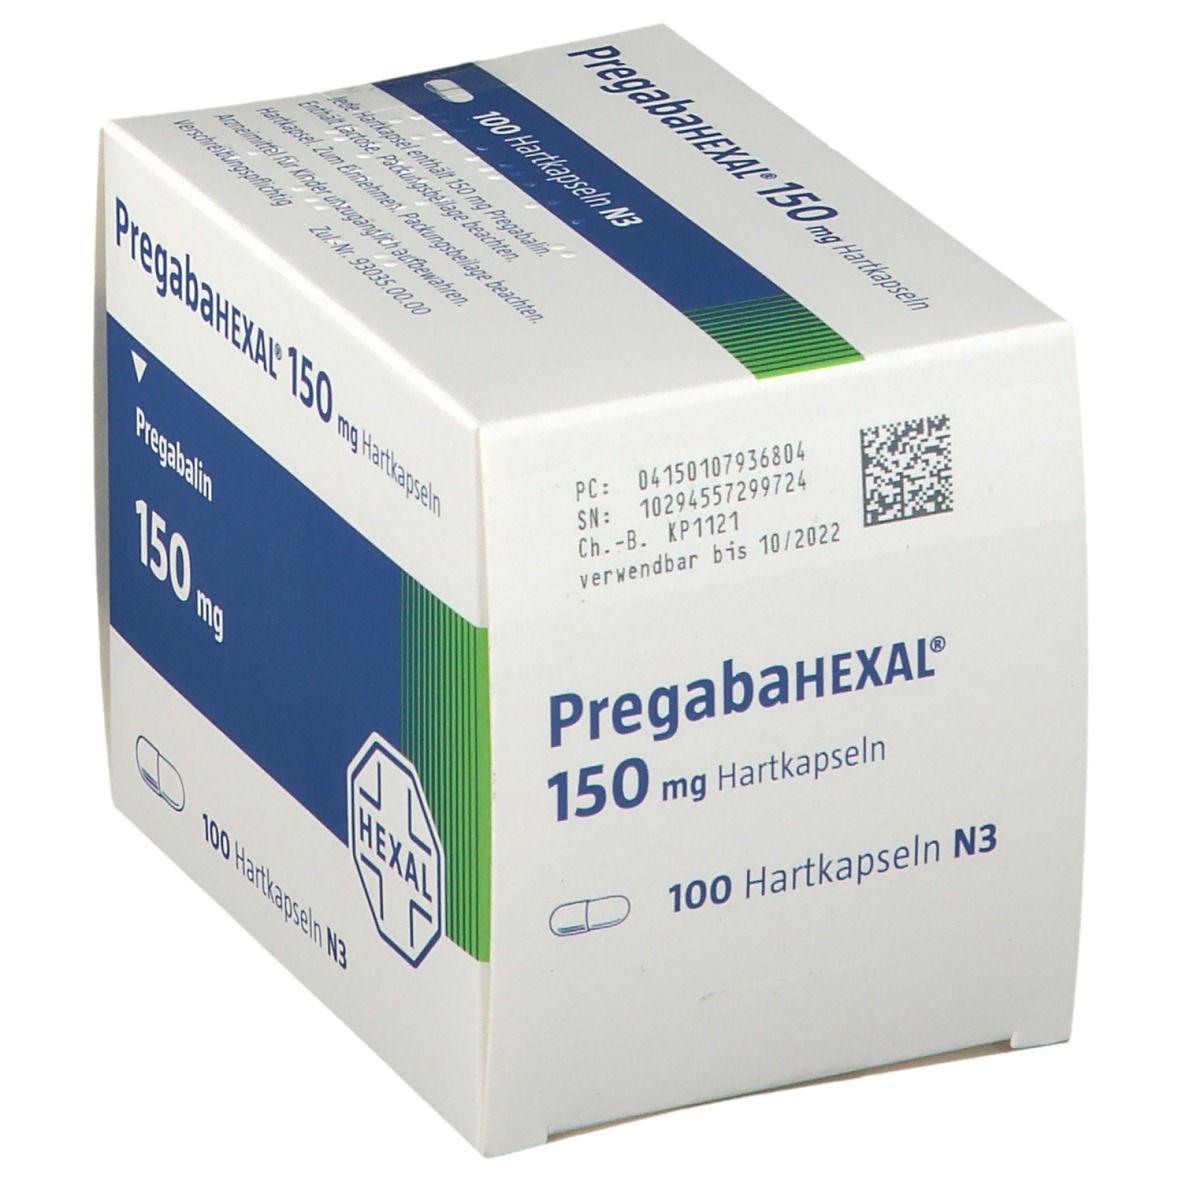 PregabaHEXAL® 150 mg